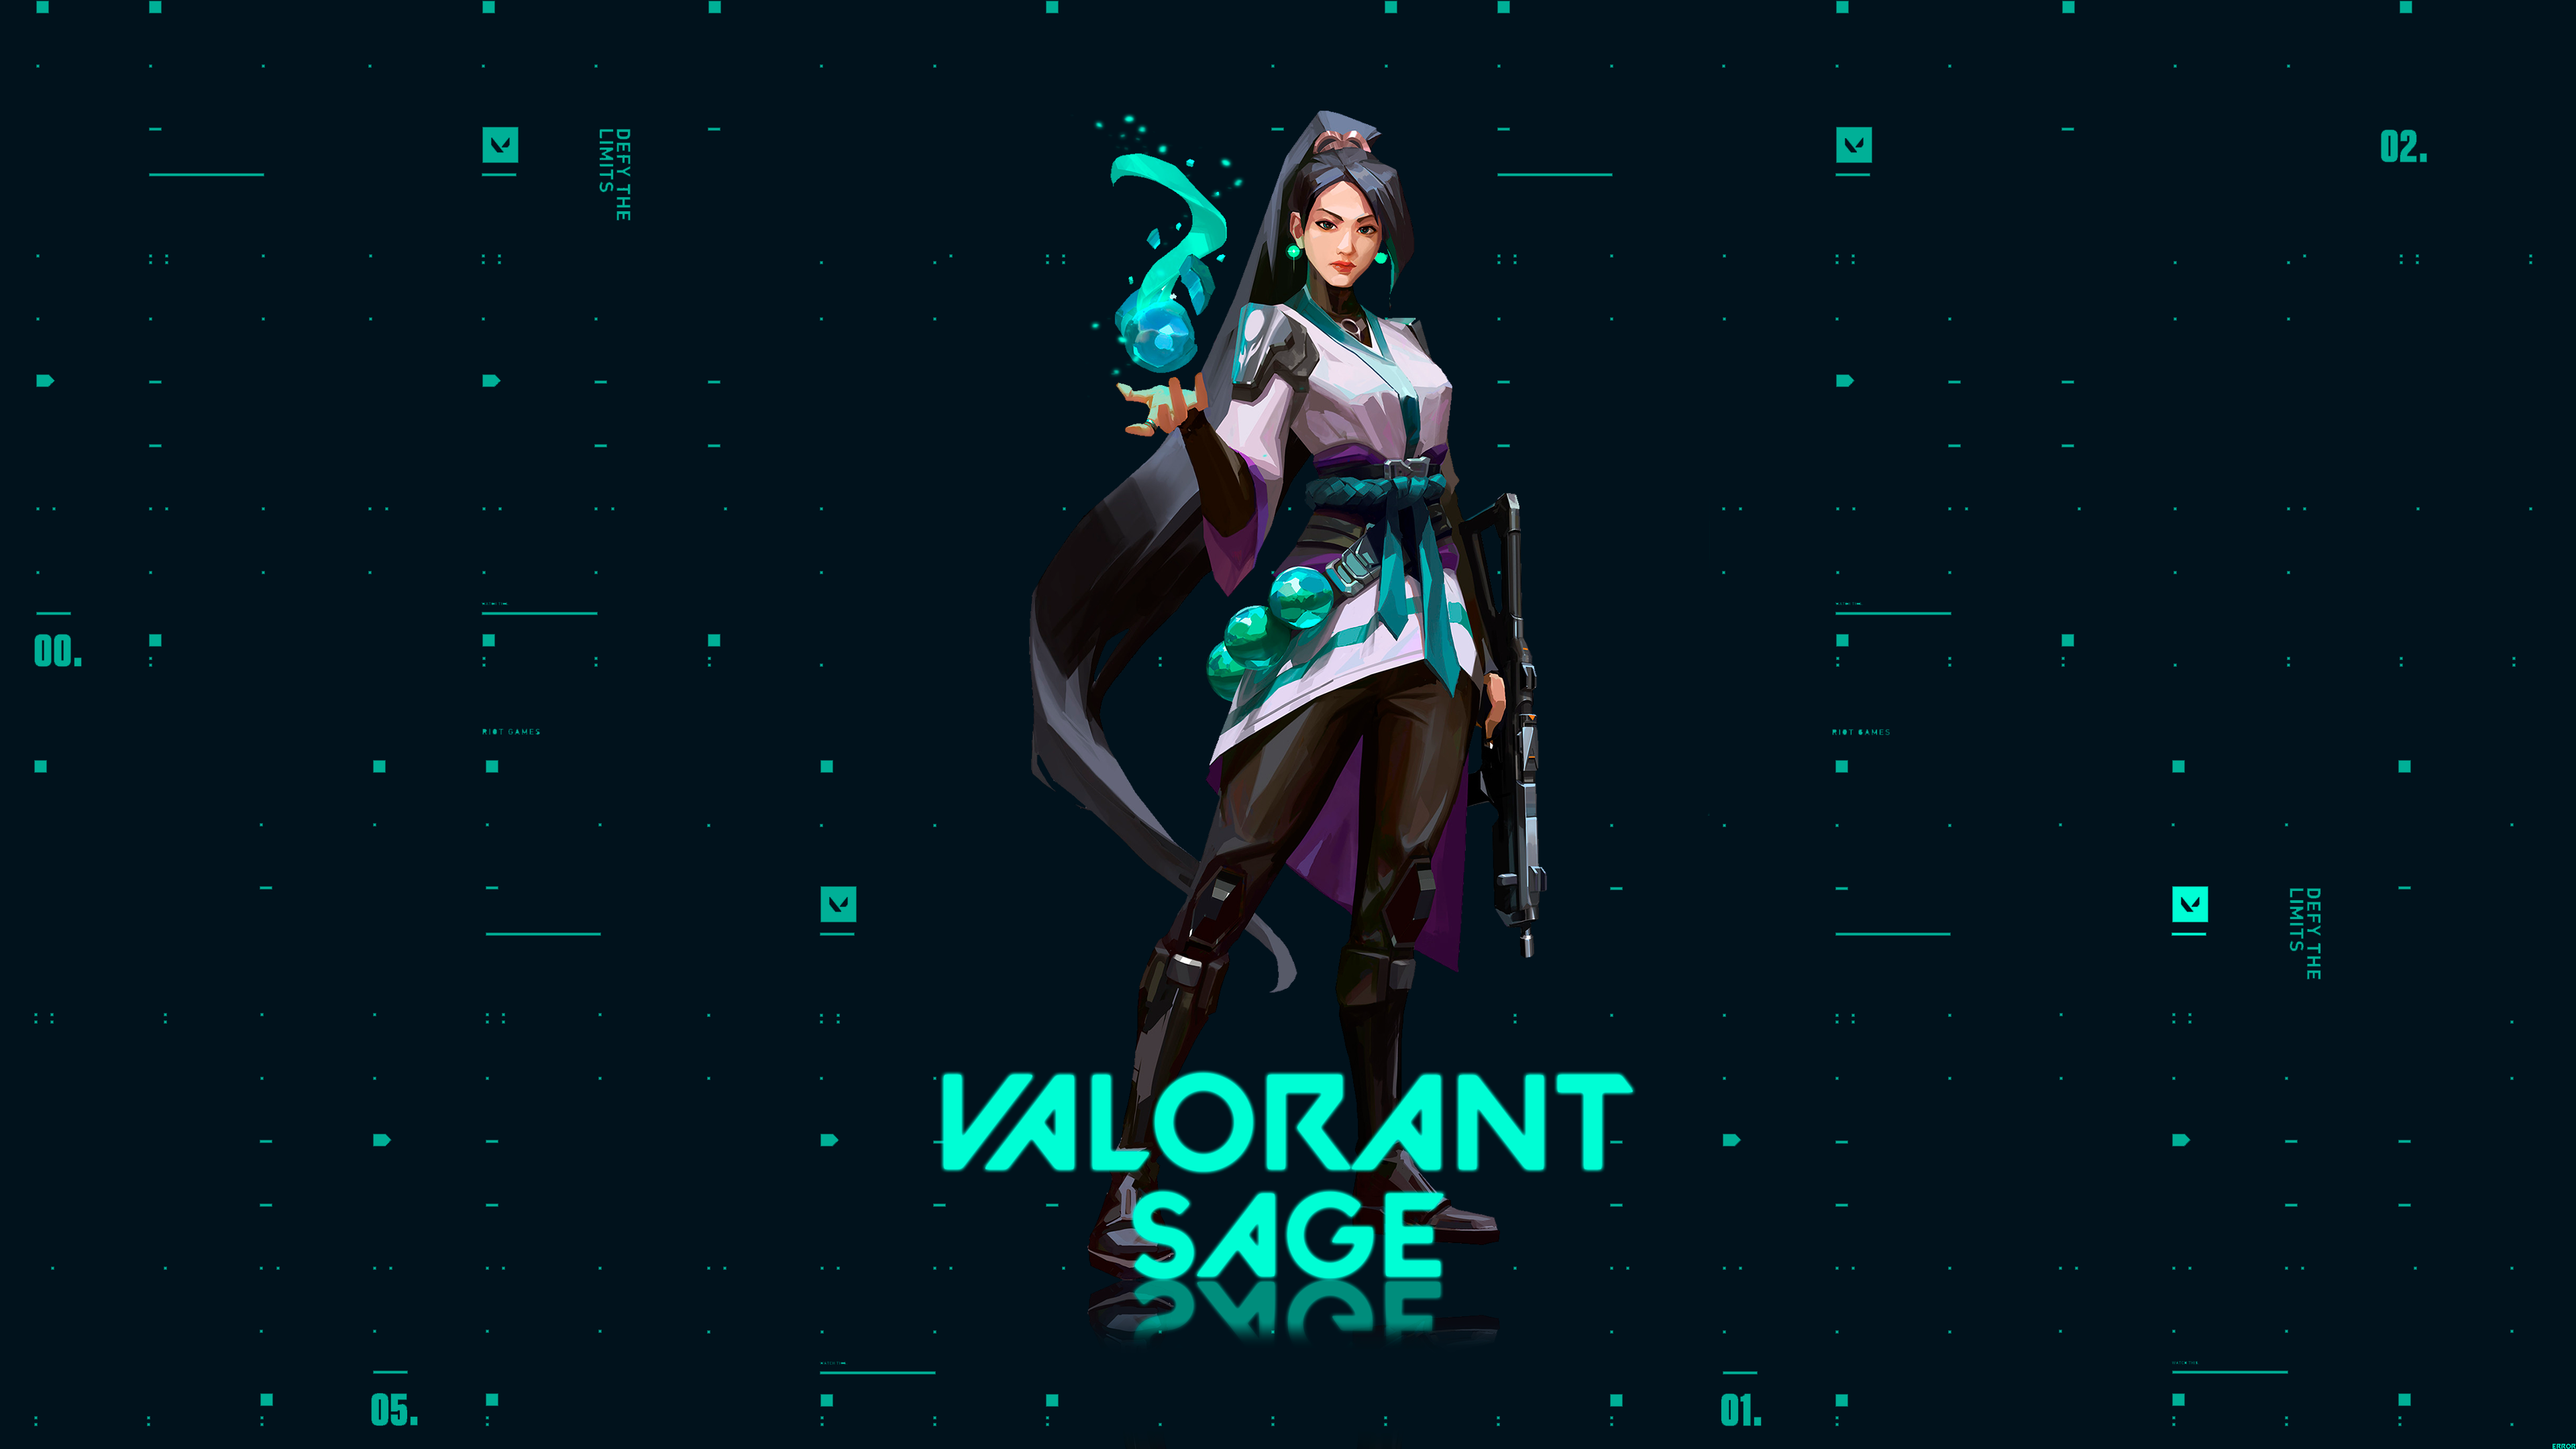 Sage Wallpaper 4K, Valorant, PC Games